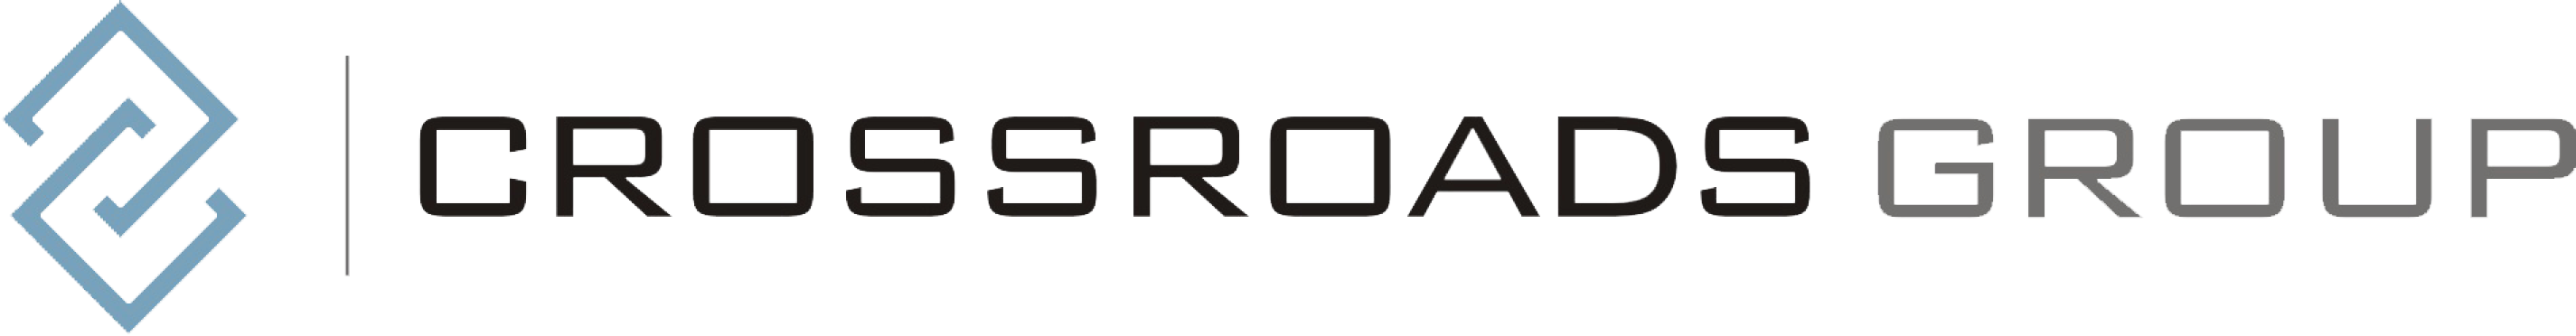 Crossroads Group logo